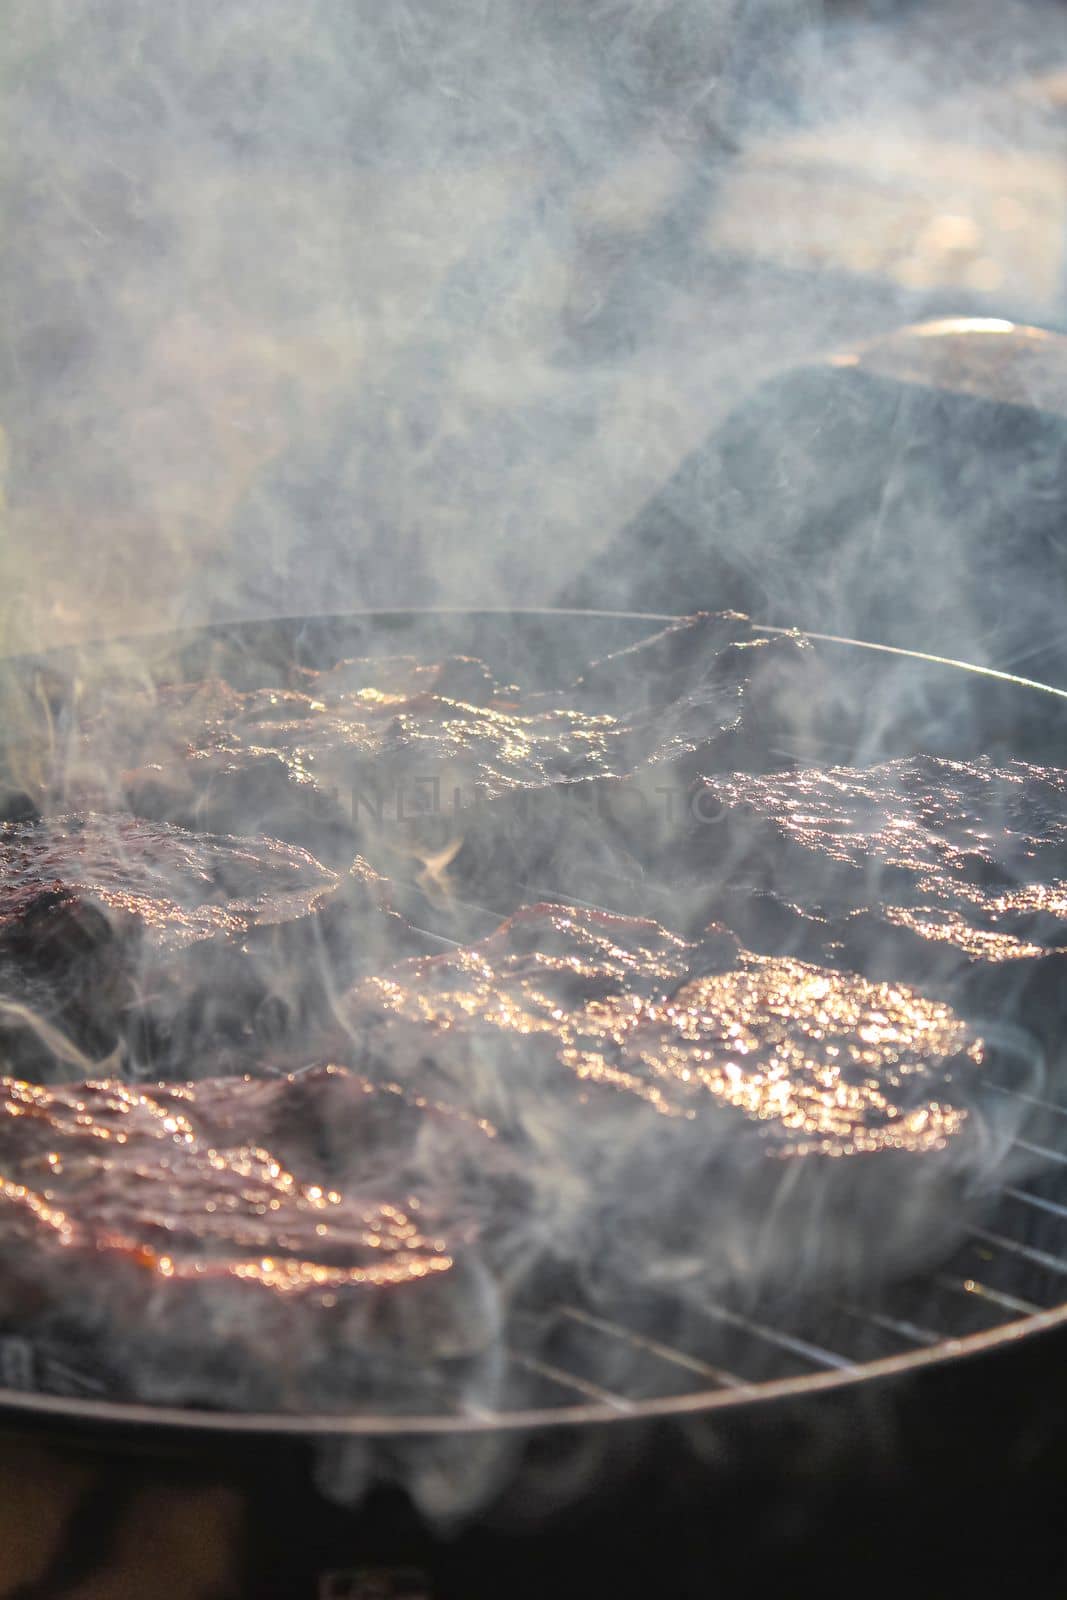 Preparing Barbeque BBQ Campfire and sausages meat steak chicken in Speckenbütteler Park Lehe Bremerhaven Bremen Germany.